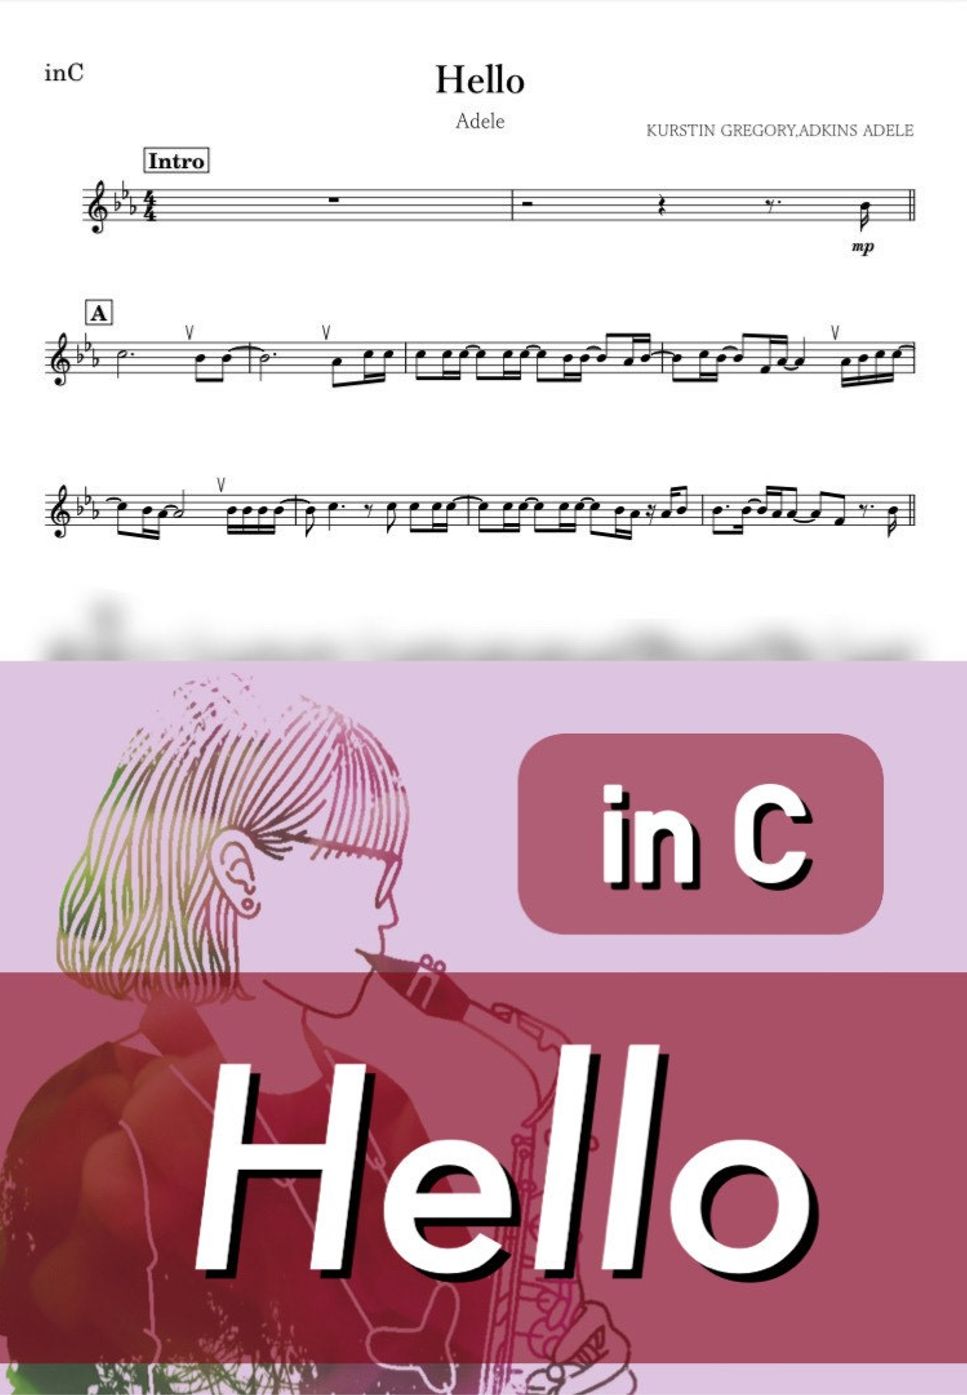 Adele - Hello (C) by kanamusic